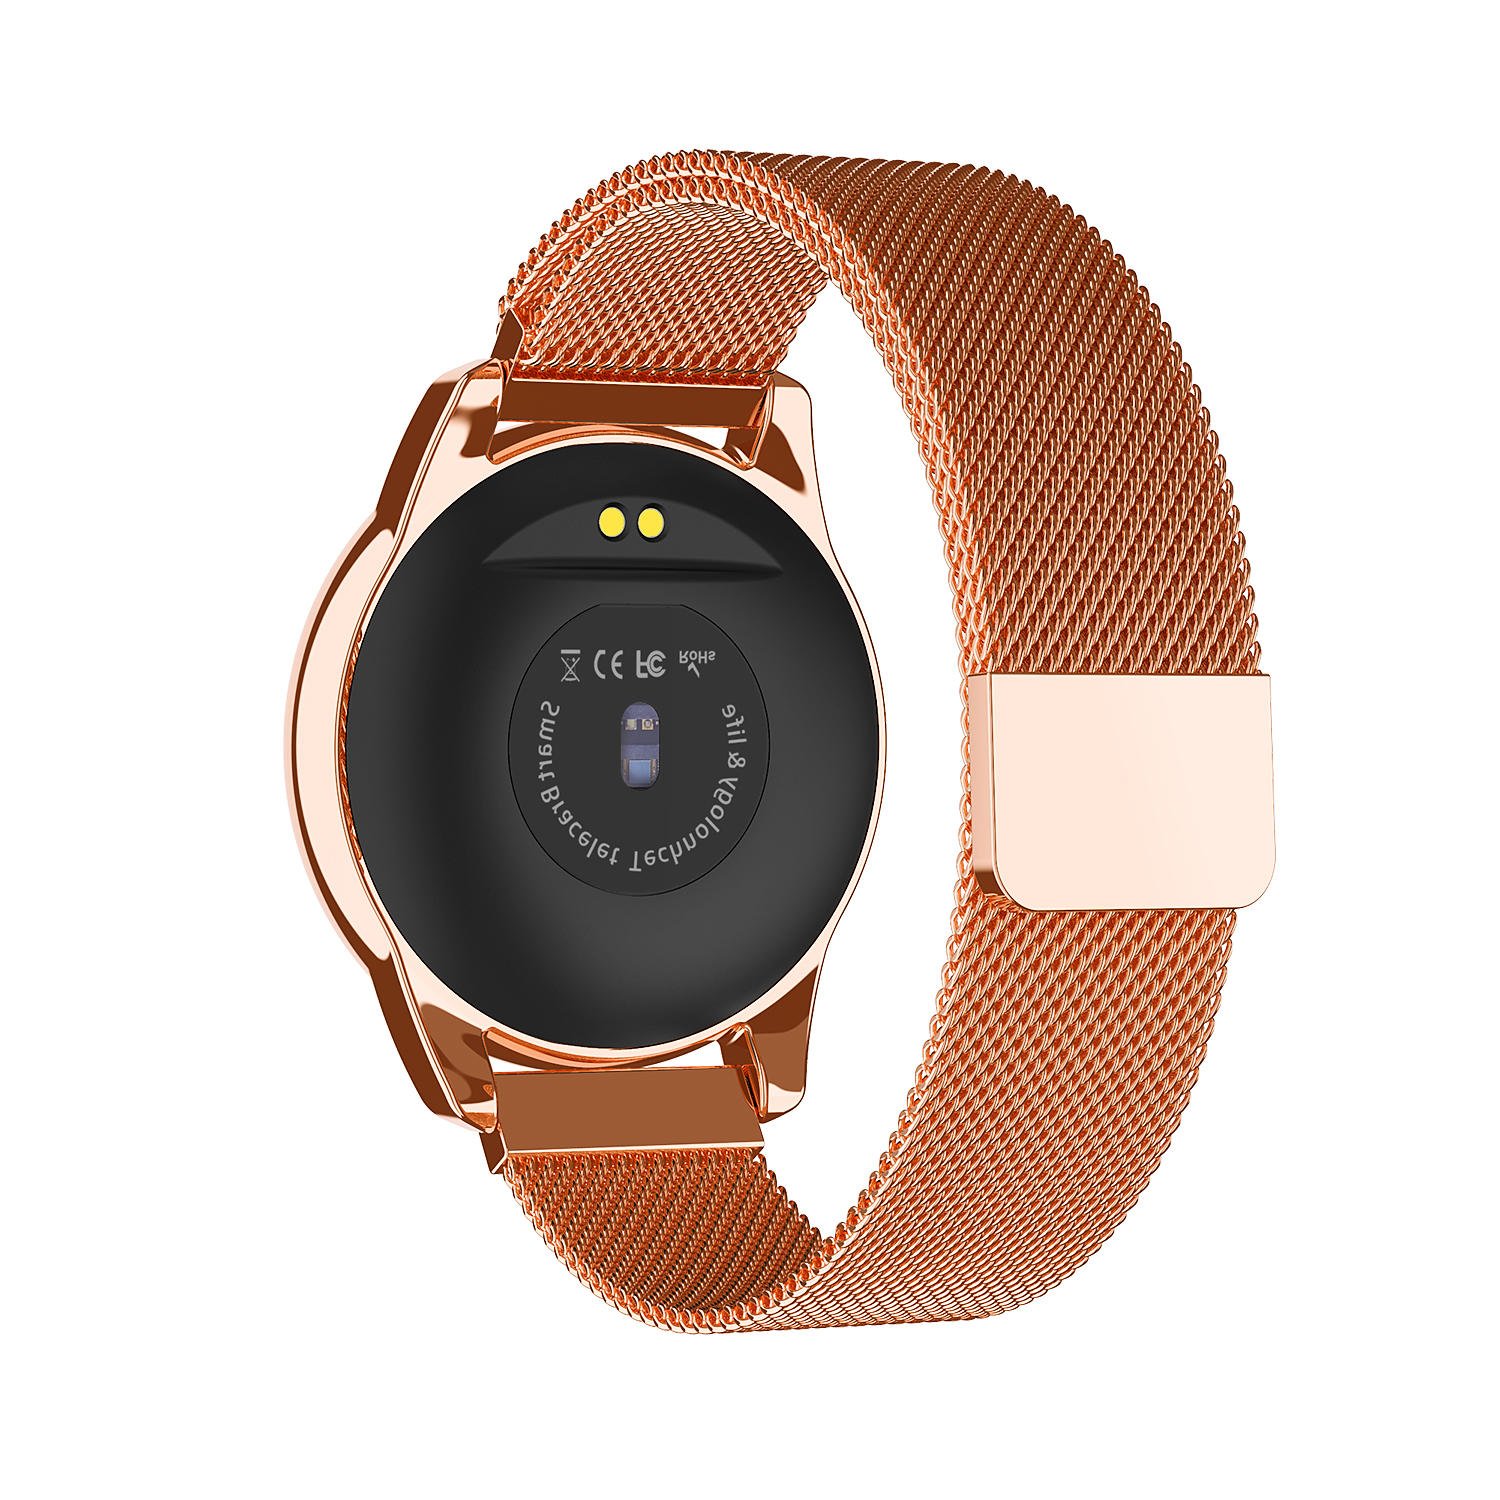 Watch 4 smart watch hd color screen wristband (17)